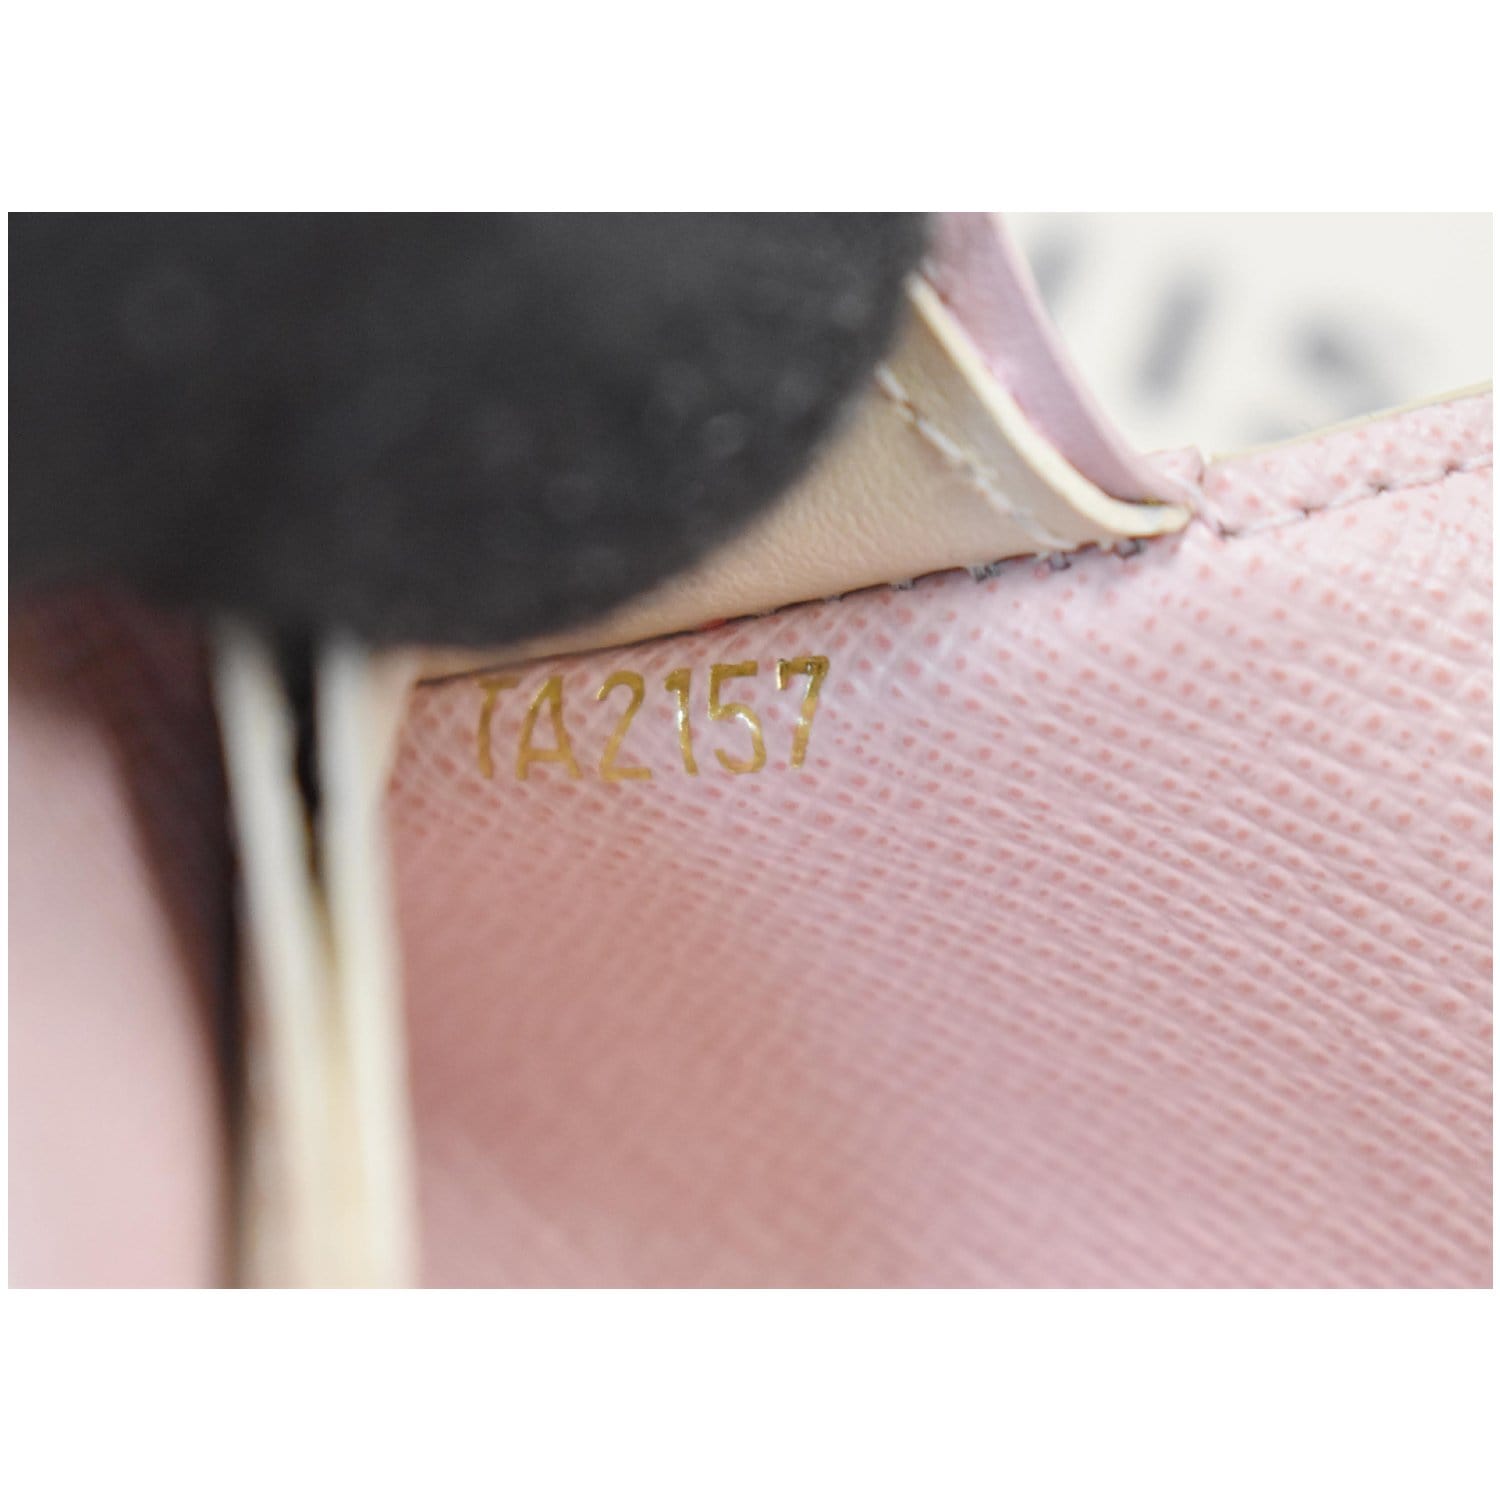 Louis Vuitton Damier Azur Emilie Wallet Pink – DAC